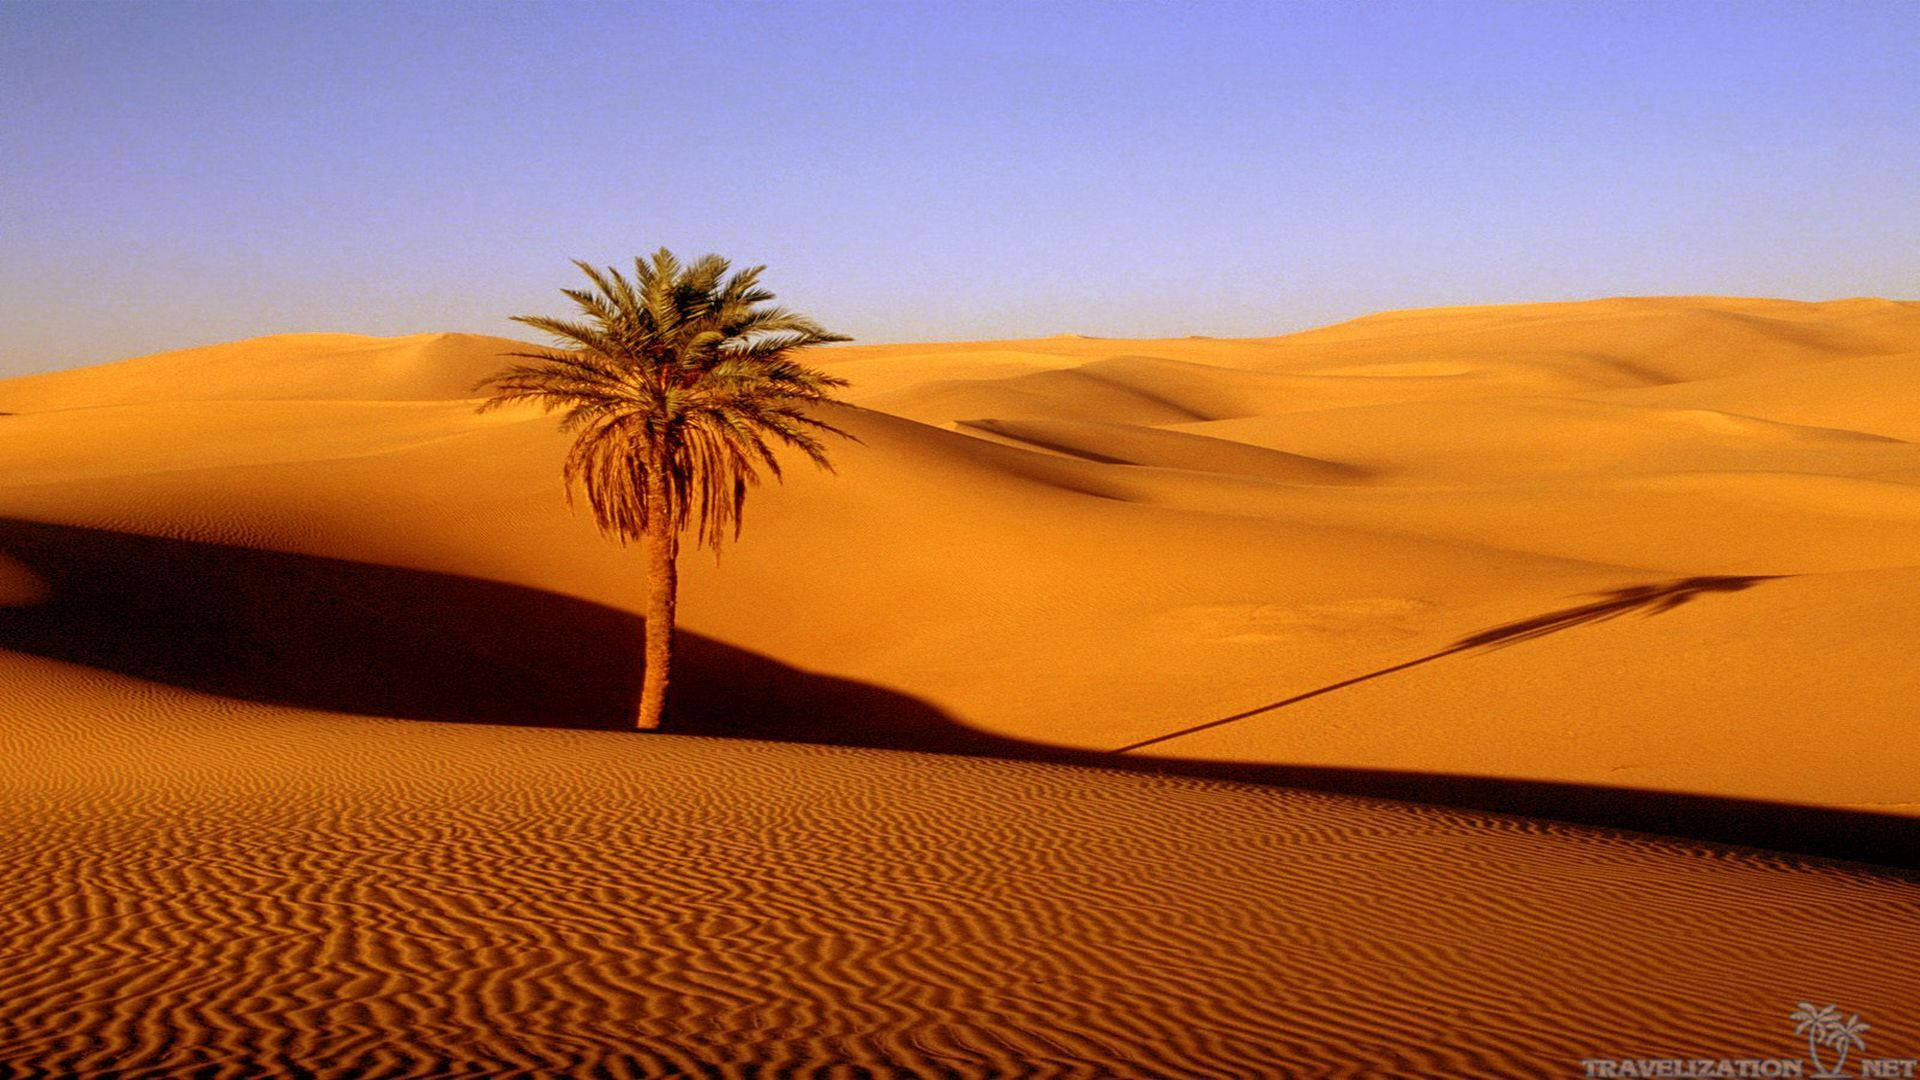 Palm Tree In Desert Background